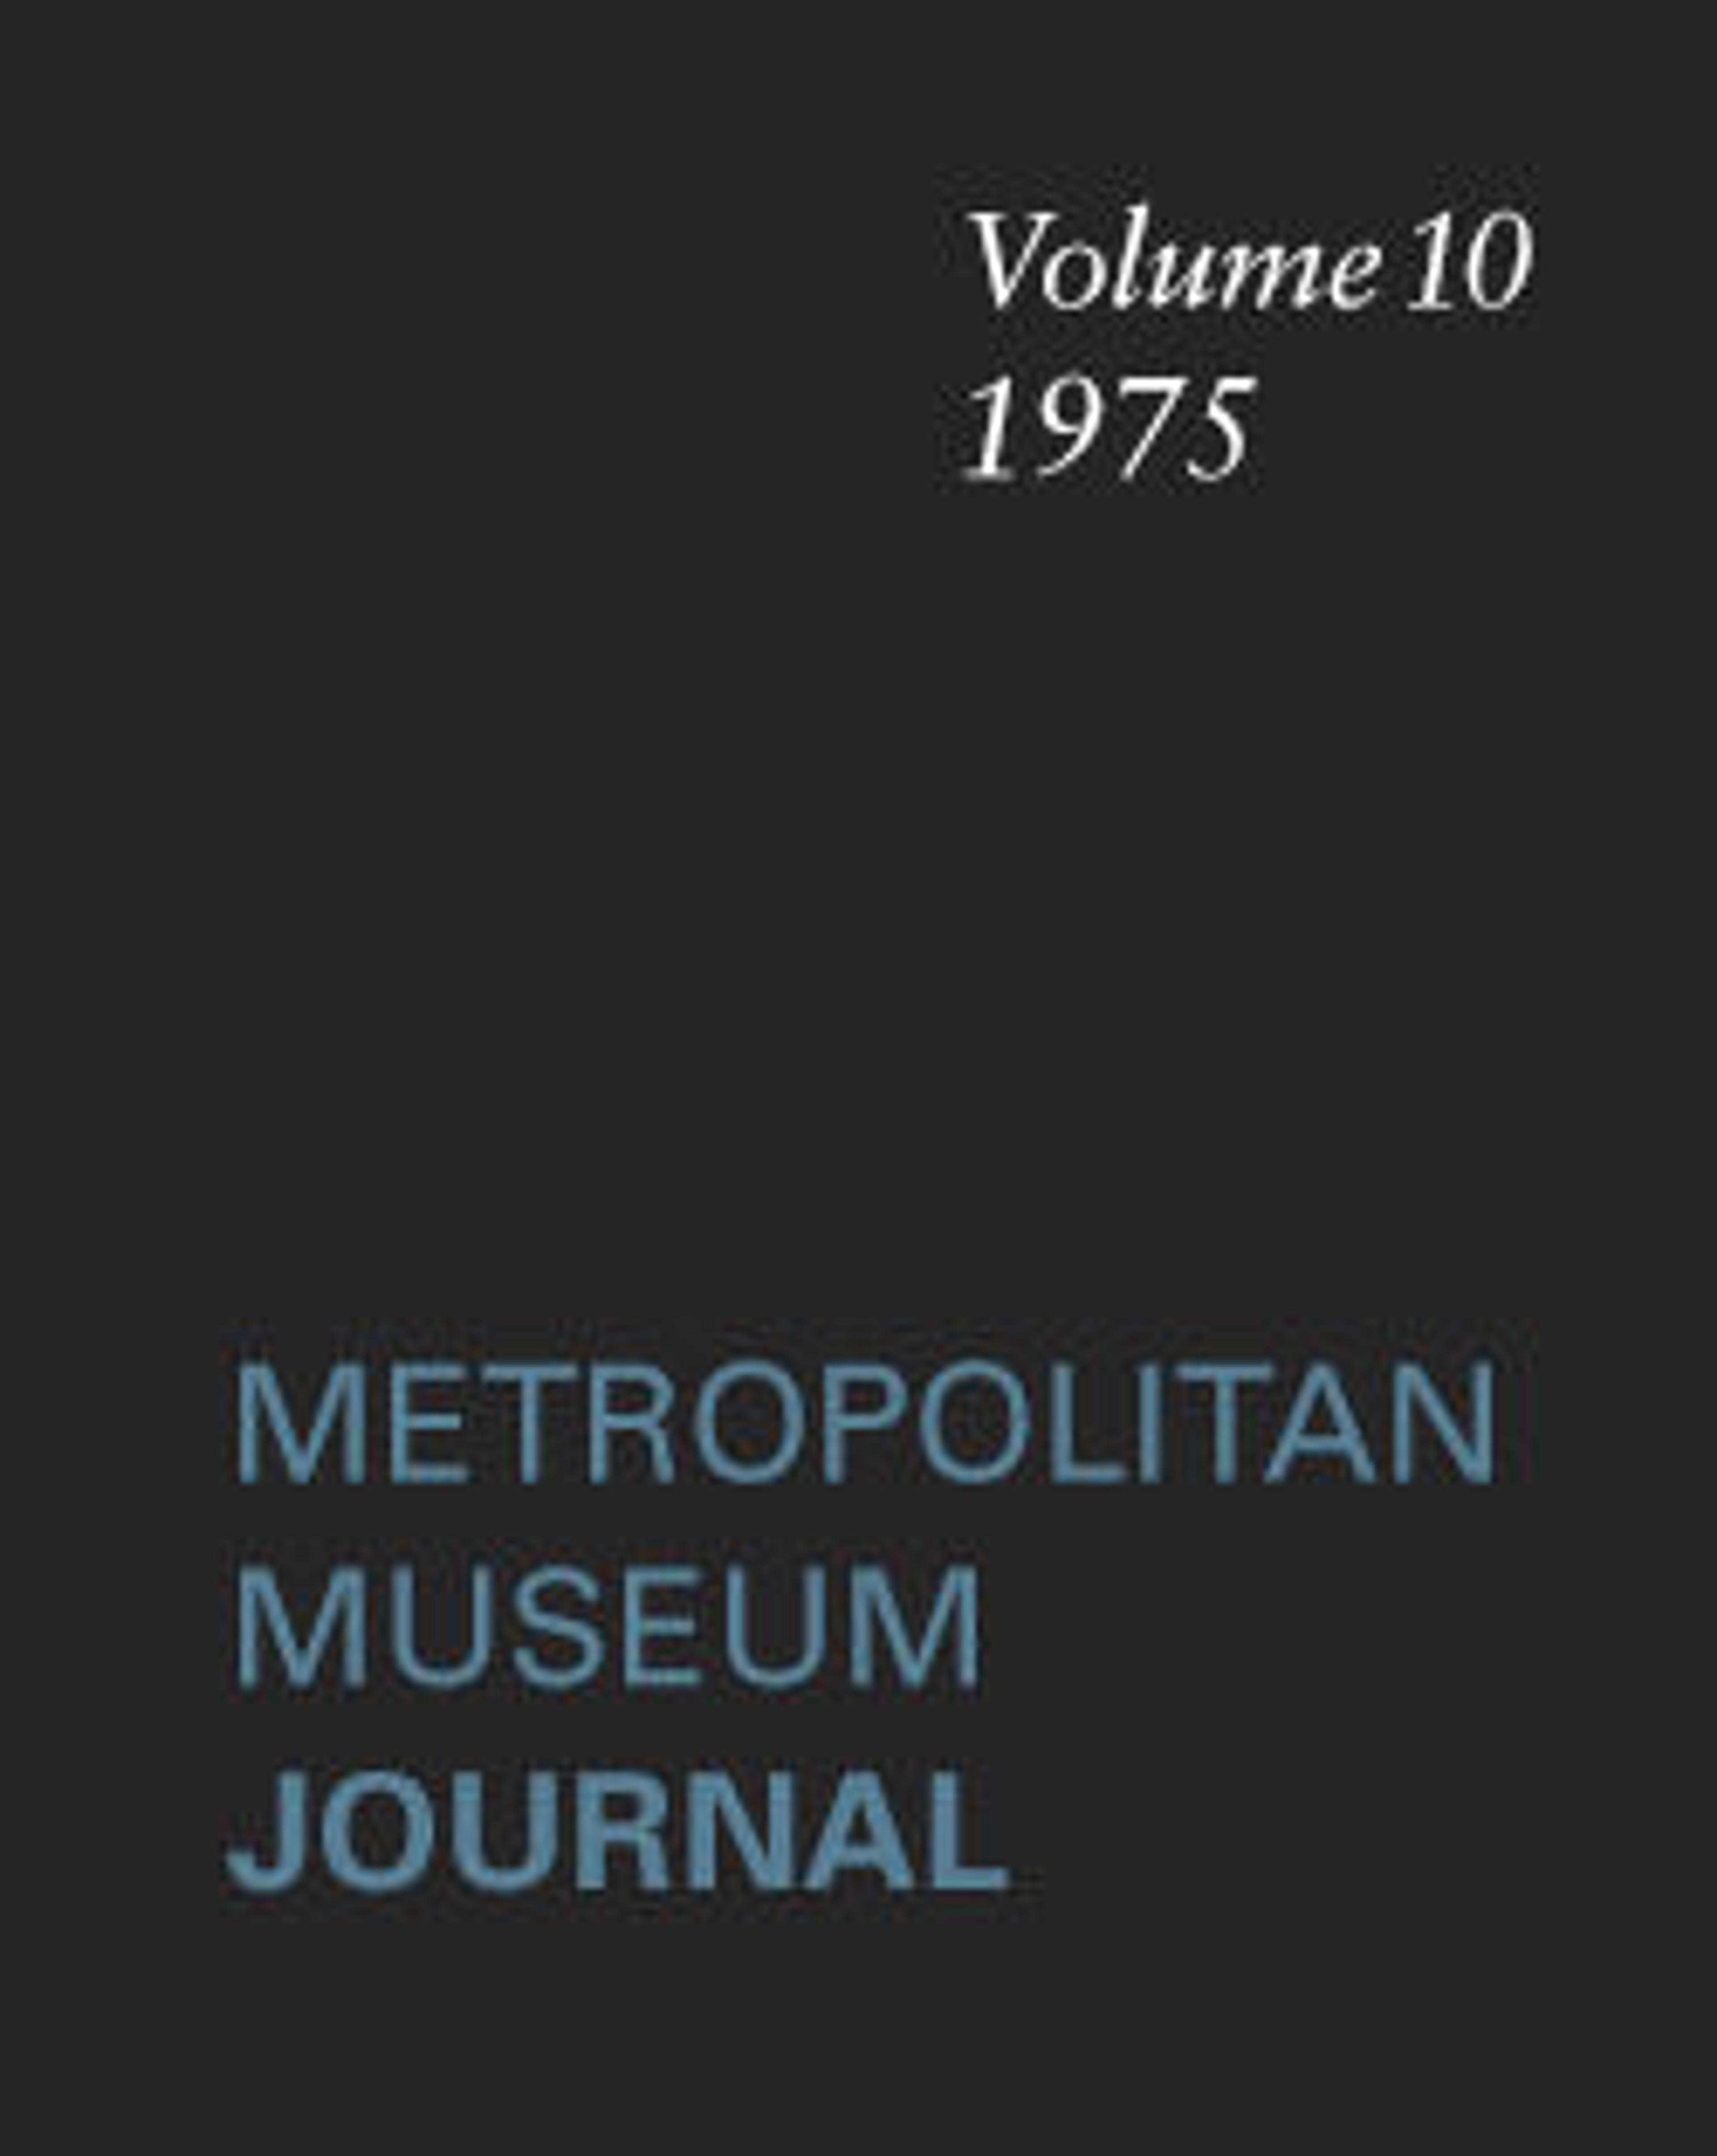 The Metropolitan Museum Journal, v. 10 (1975)